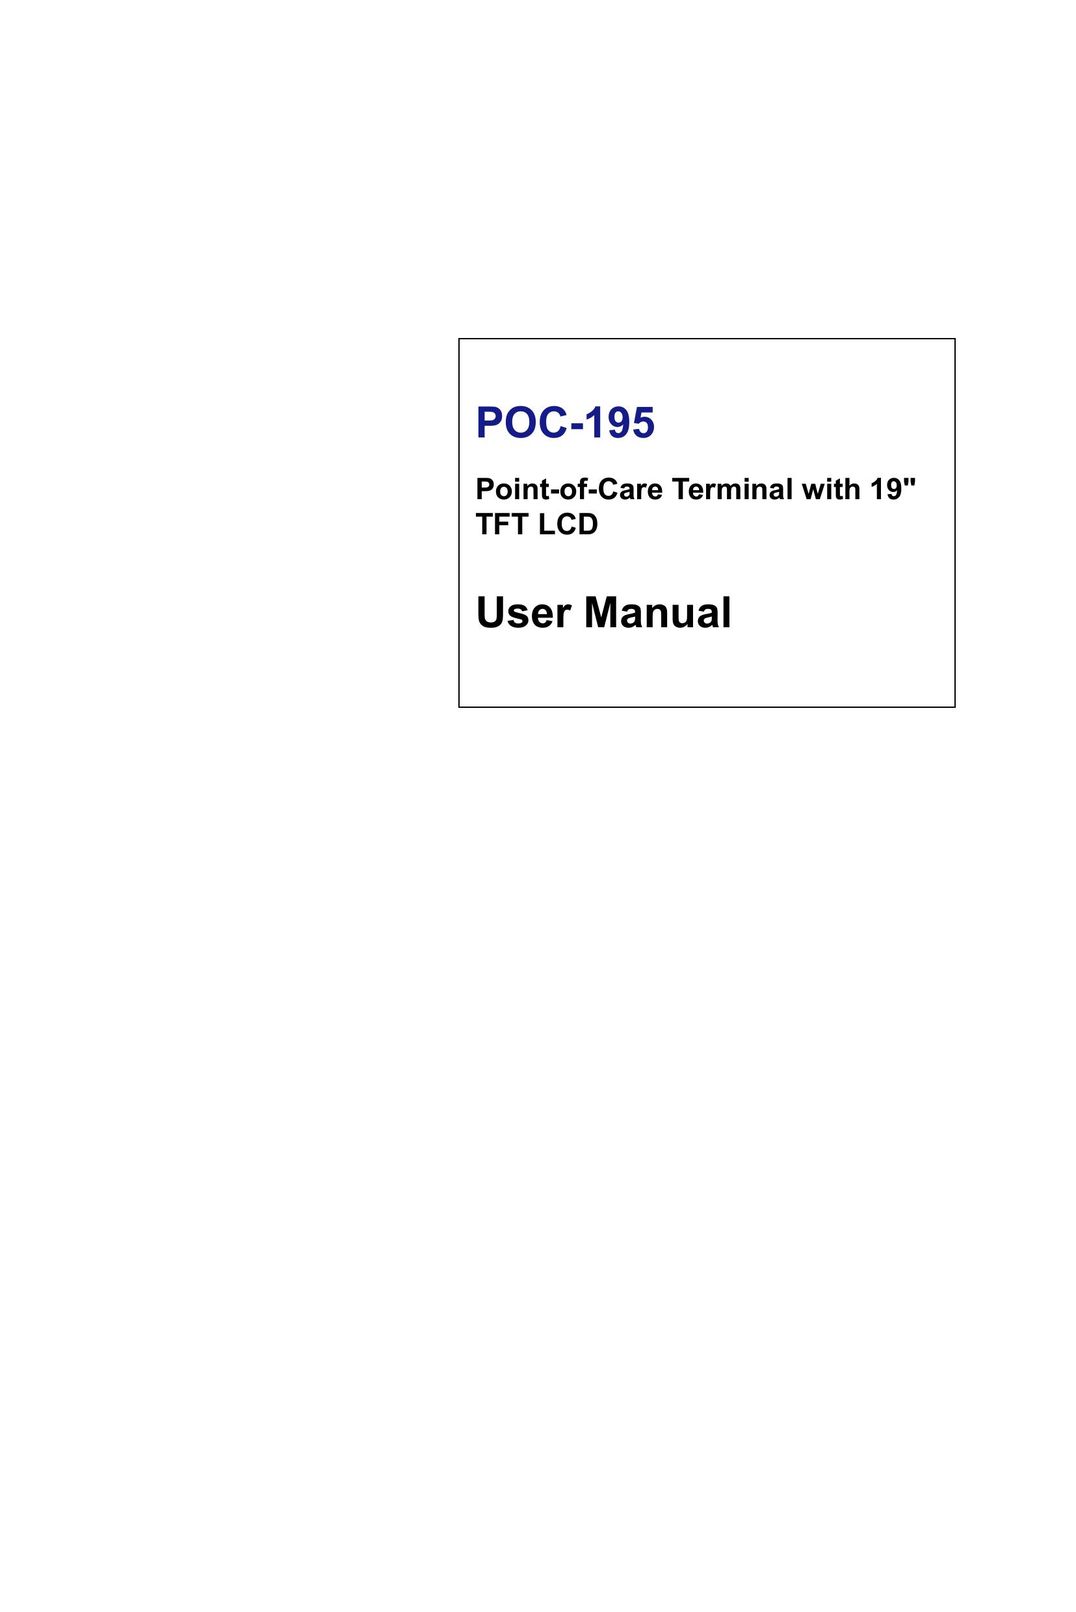 Advantech POC-195 Personal Computer User Manual